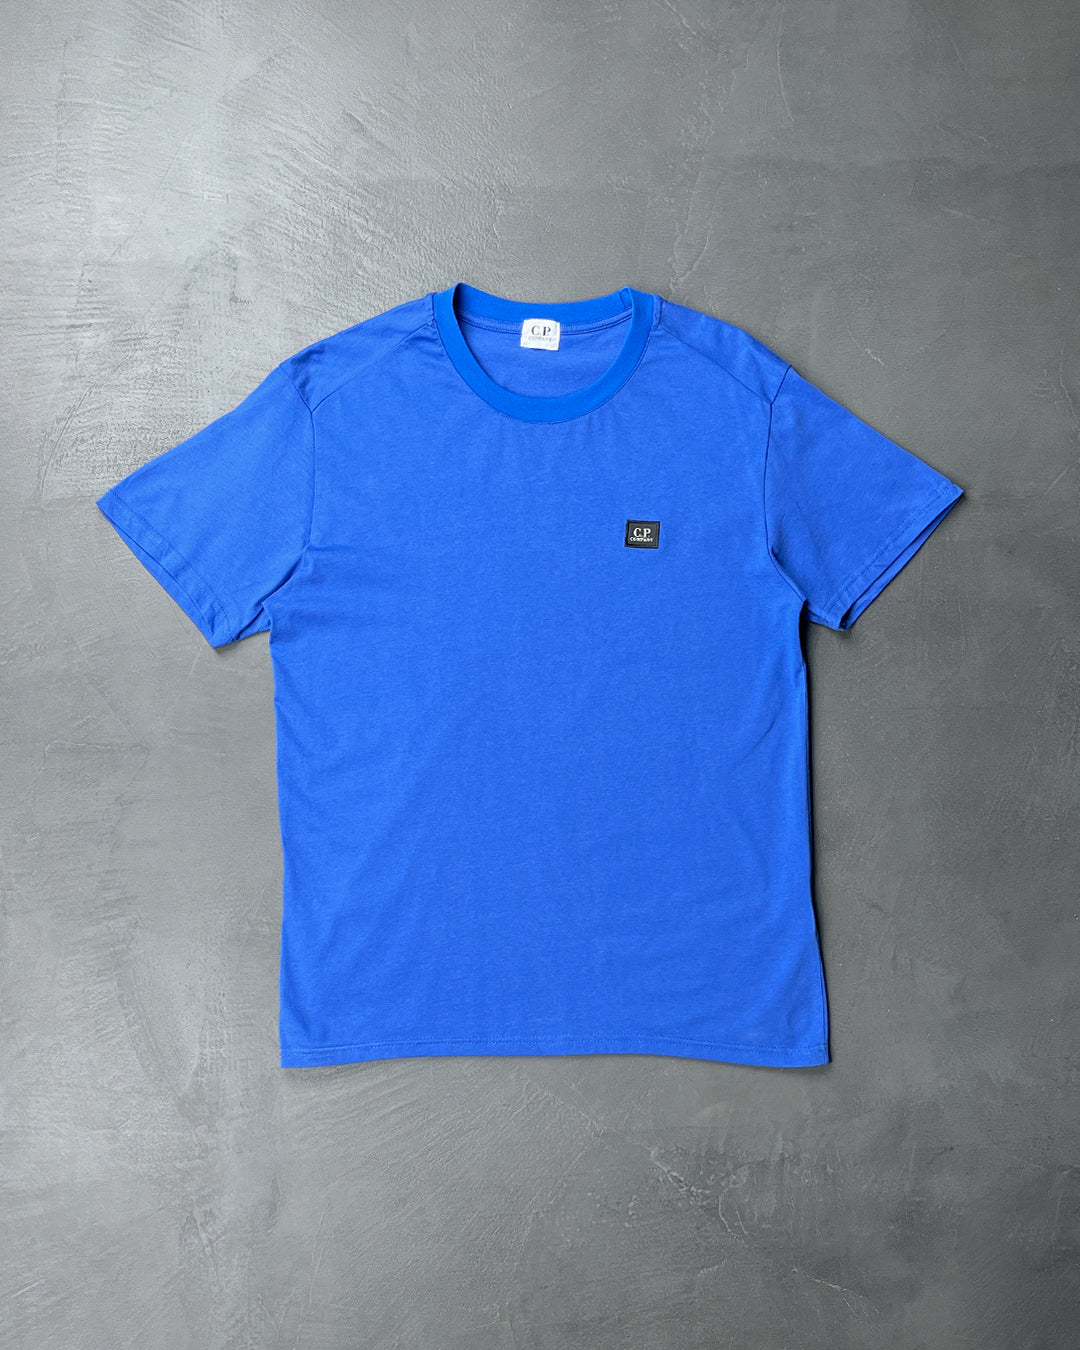 C.P. COMPANY Jersey Small Label T-shirt Blue